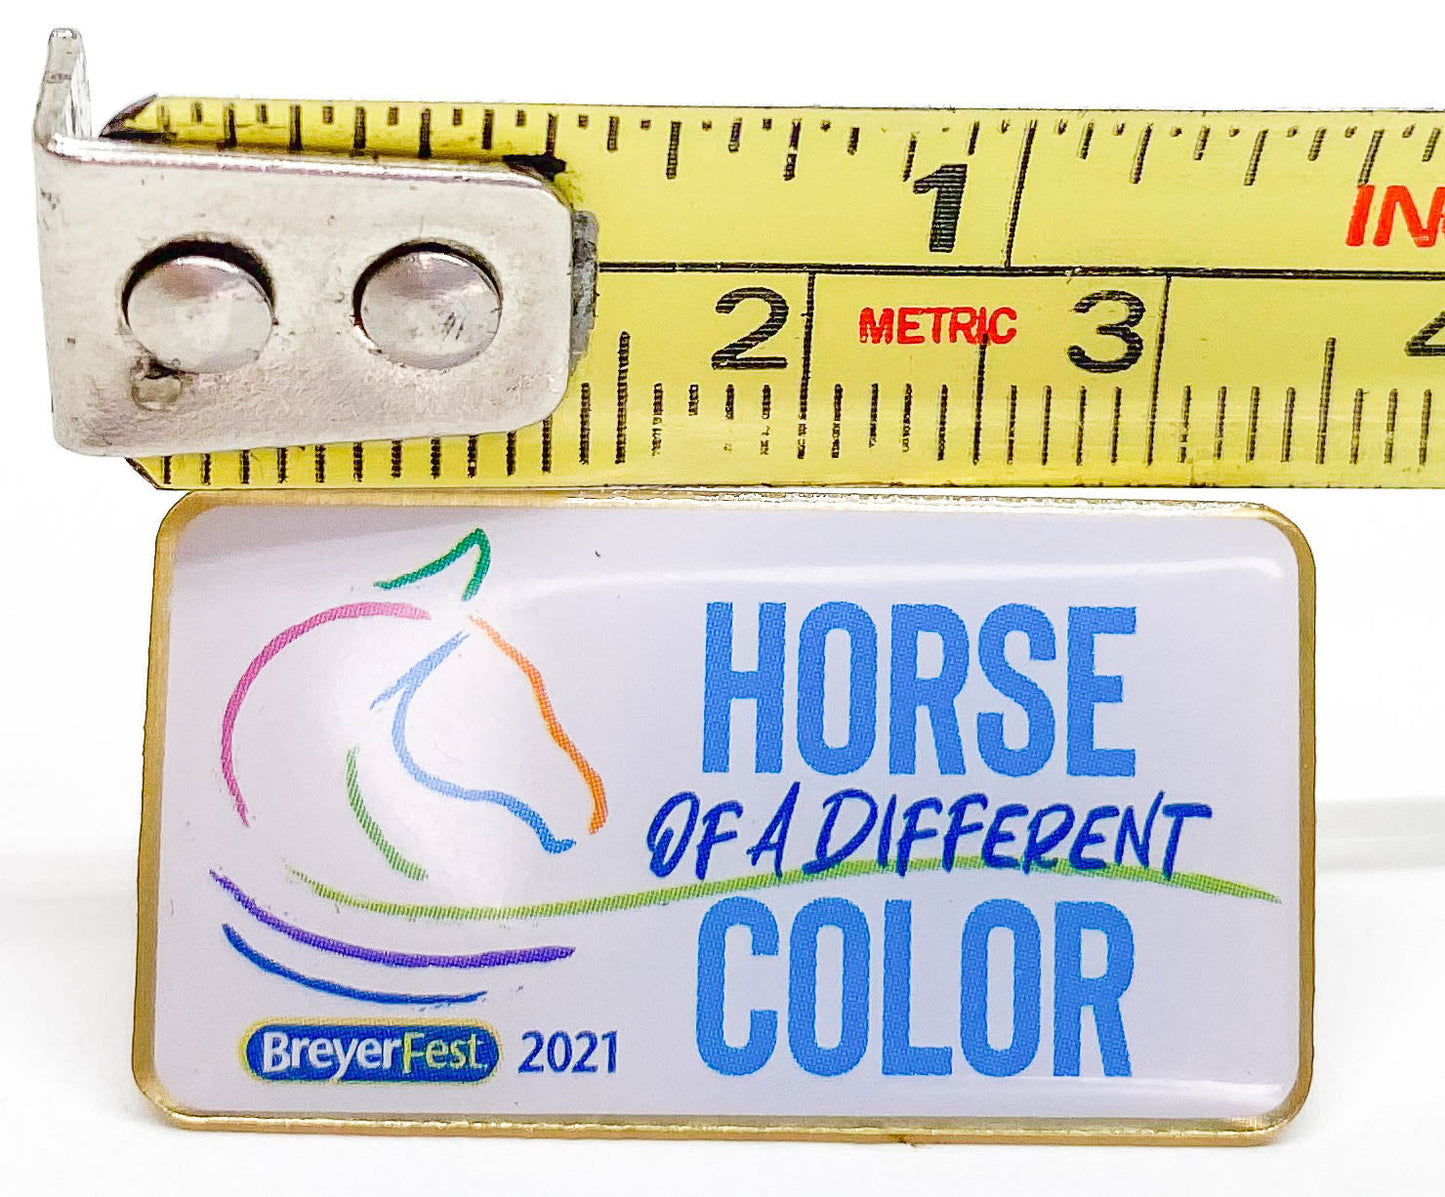 Lapel Pin - Breyerfest 2021 "Horse of a Different Color"